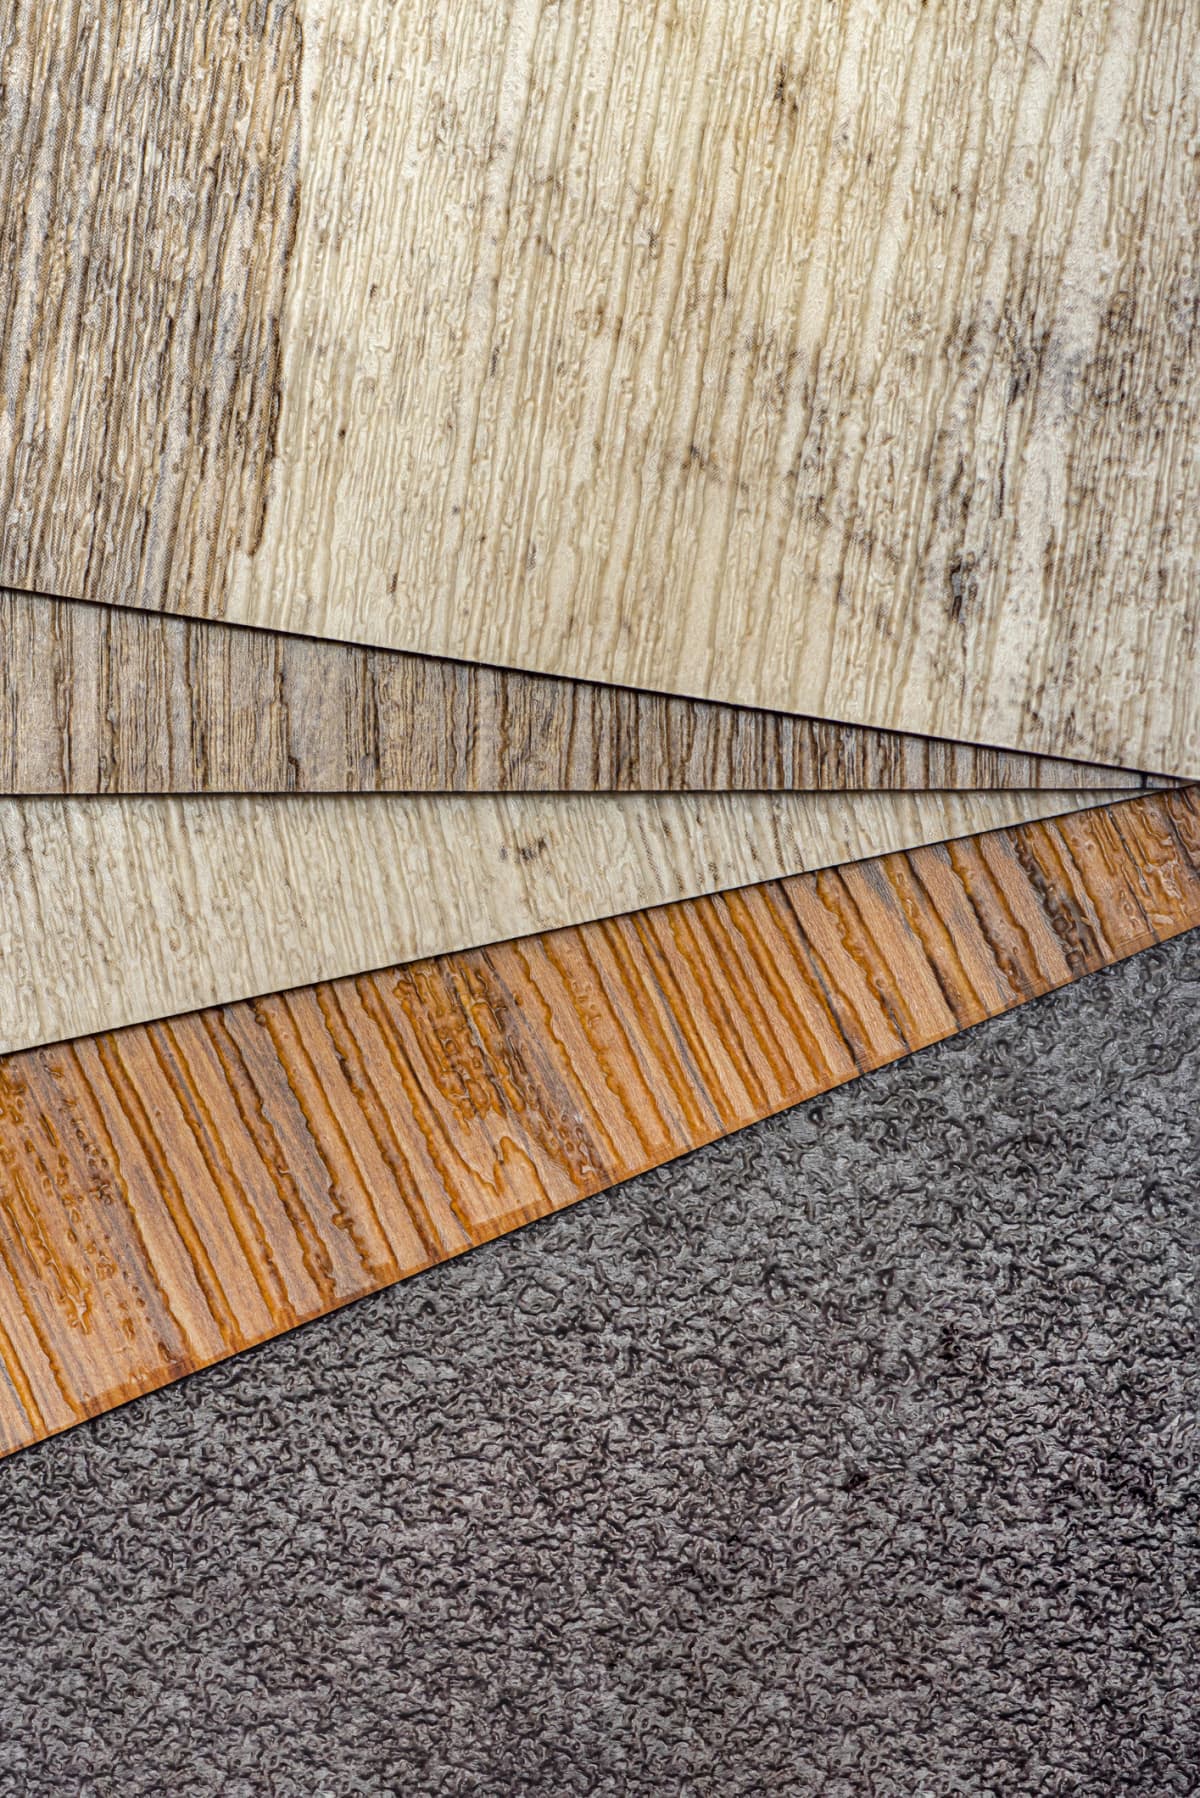 Different swatches of vinyl flooring.